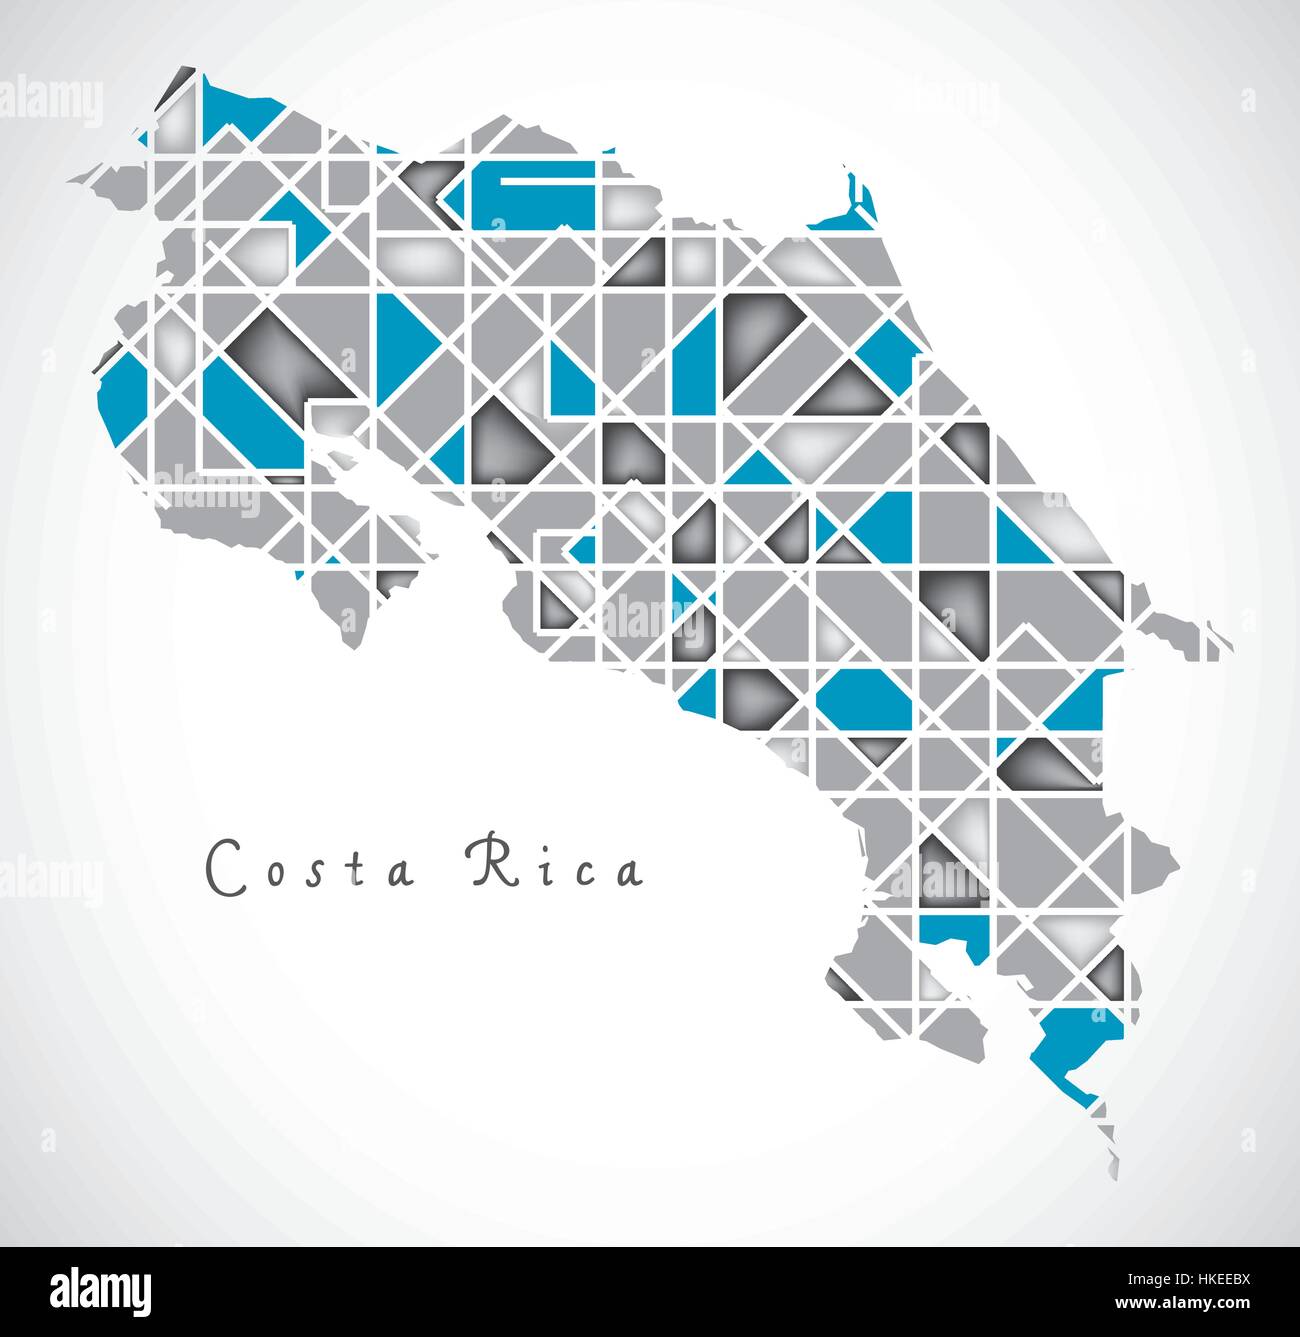 Costa Rica Map illustration illustrations style Diamant Illustration de Vecteur